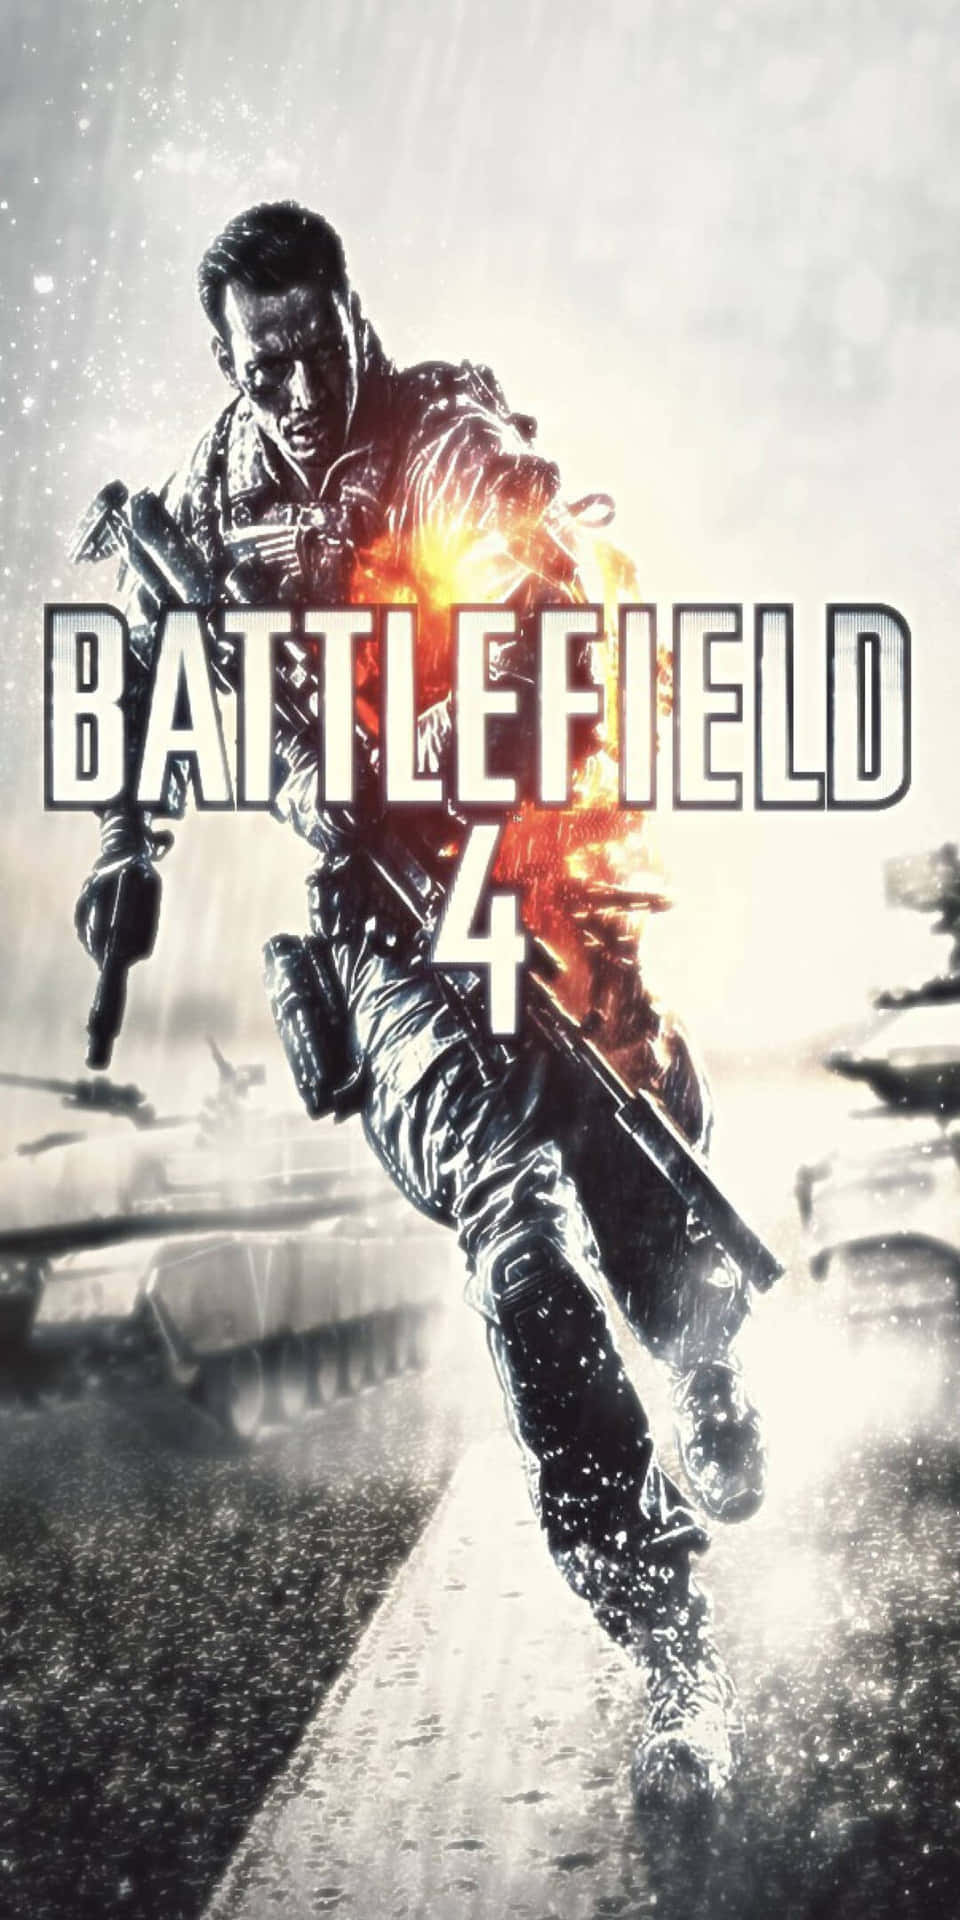 Pixel3 Battlefield 4 Bakgrundsspelsskärm.